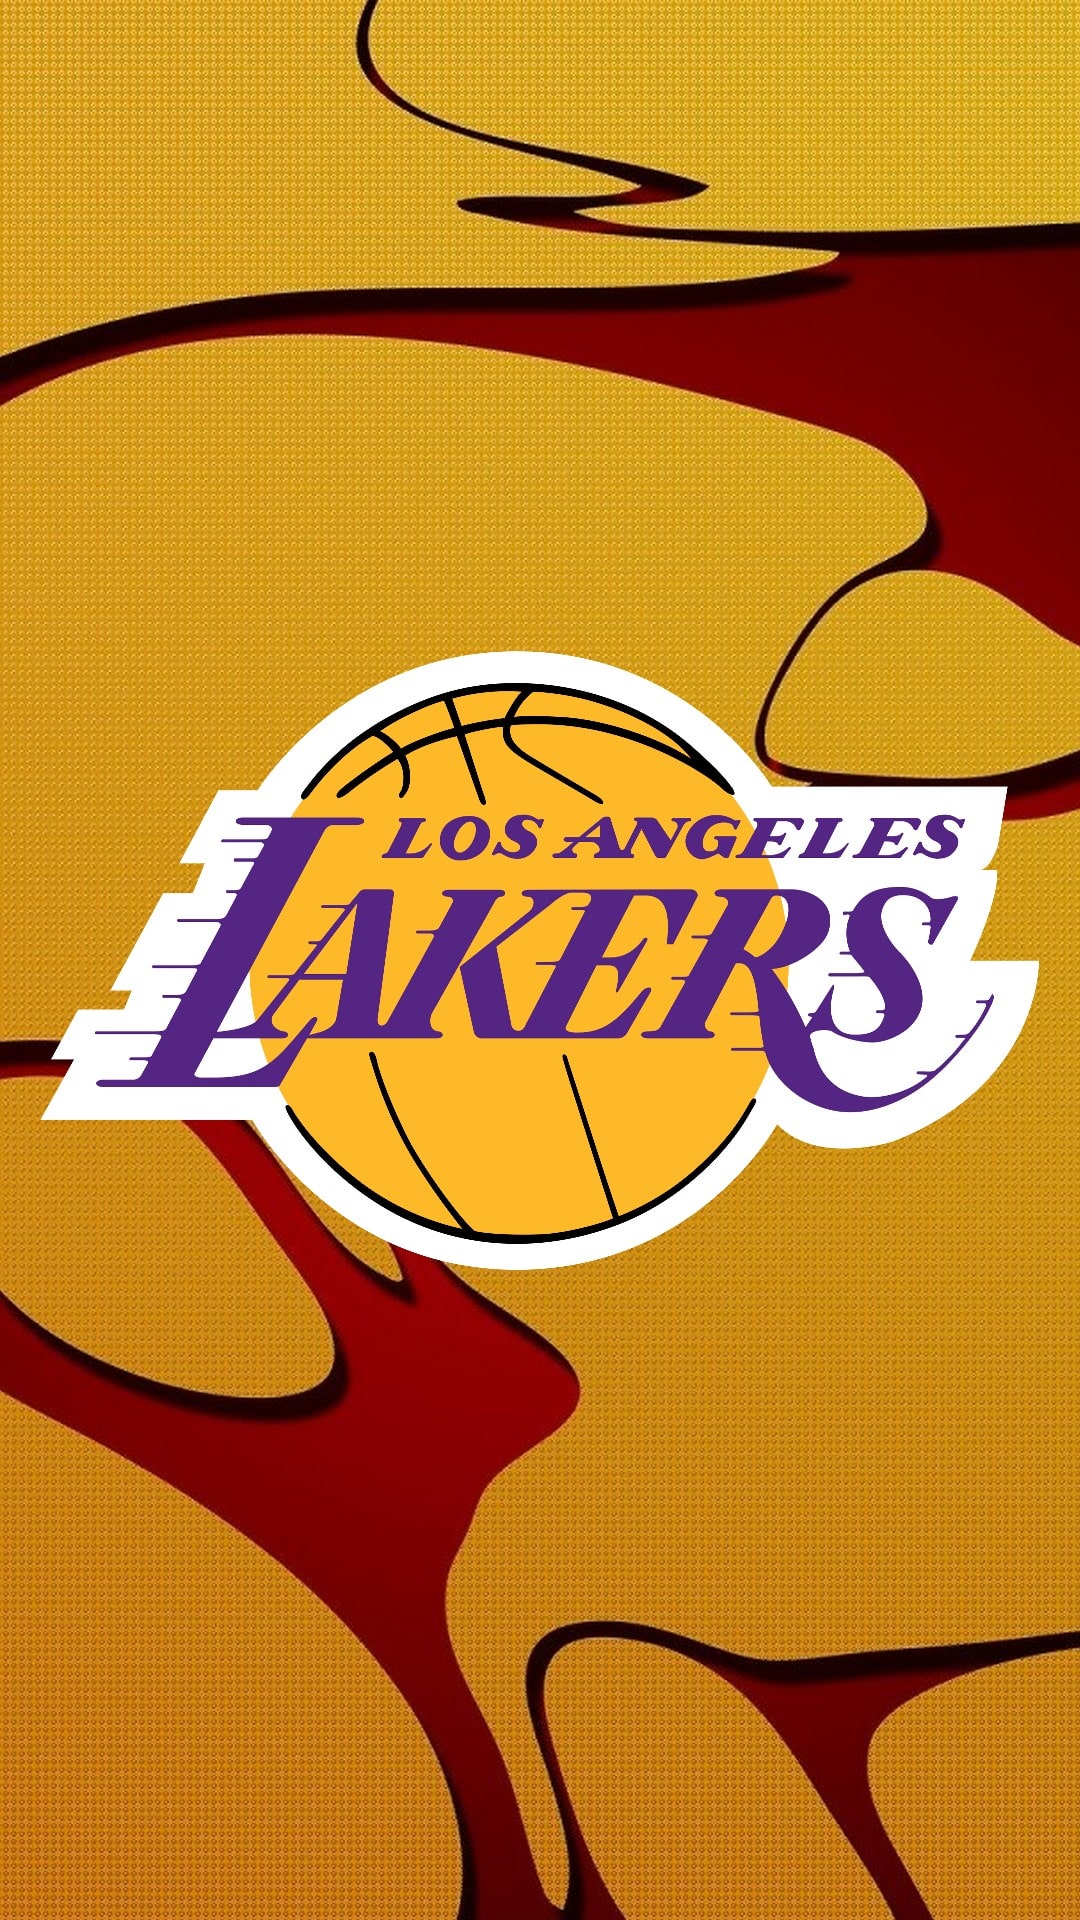 Lakers Wallpaper 2020 - KoLPaPer - Awesome Free HD Wallpapers